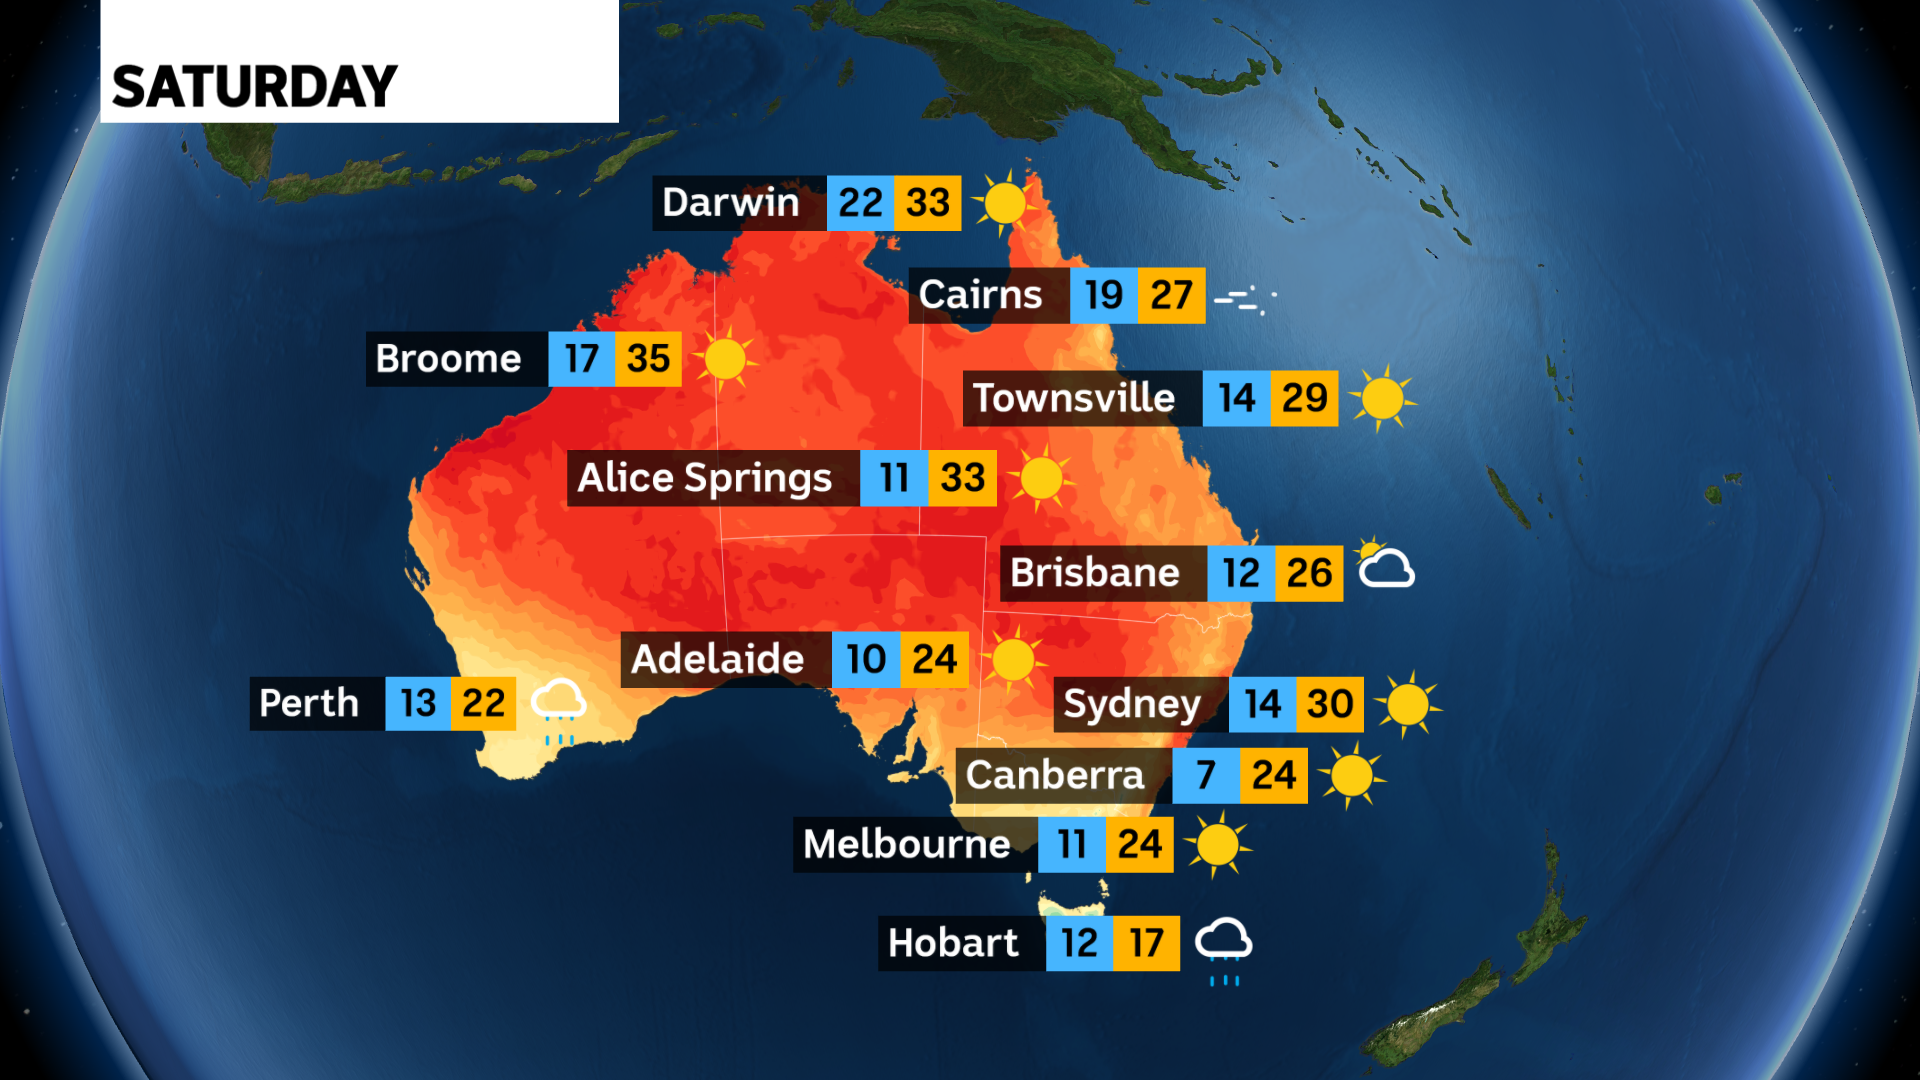 A map showing temperatures around Australia on Saturday